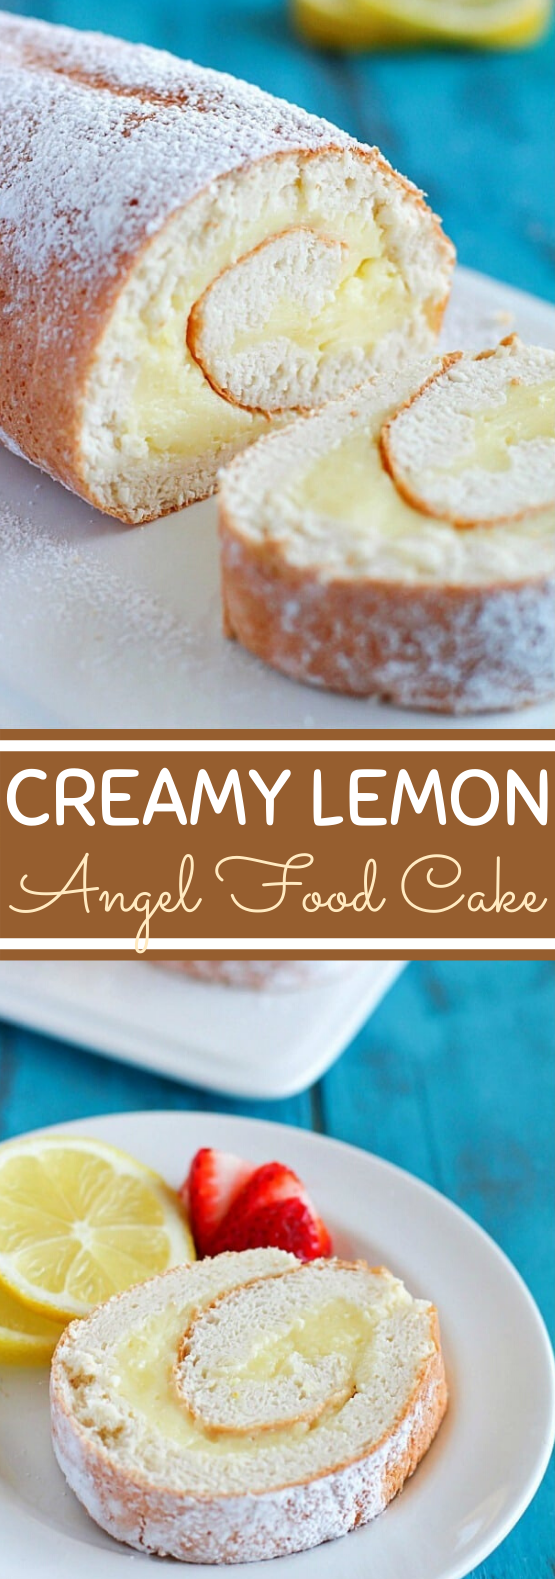 Creamy Lemon Angel Cake Roll #dessert #cake #recipes #bakery #custard